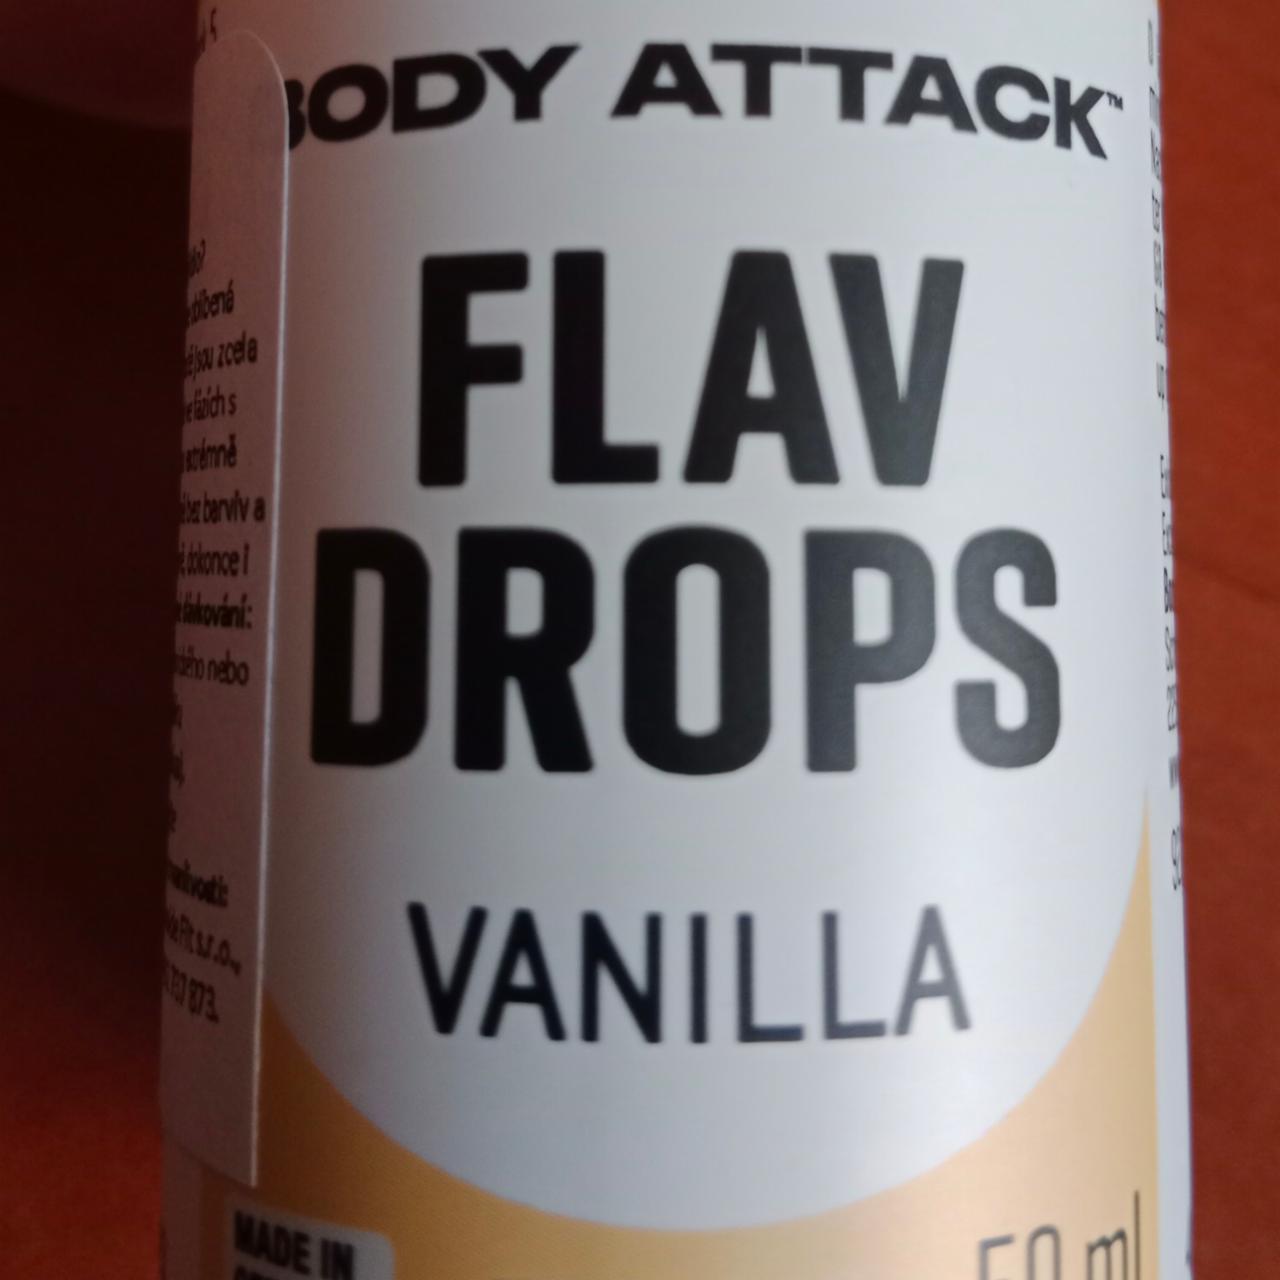 Fotografie - Flav Drops Vanilla Body Attack